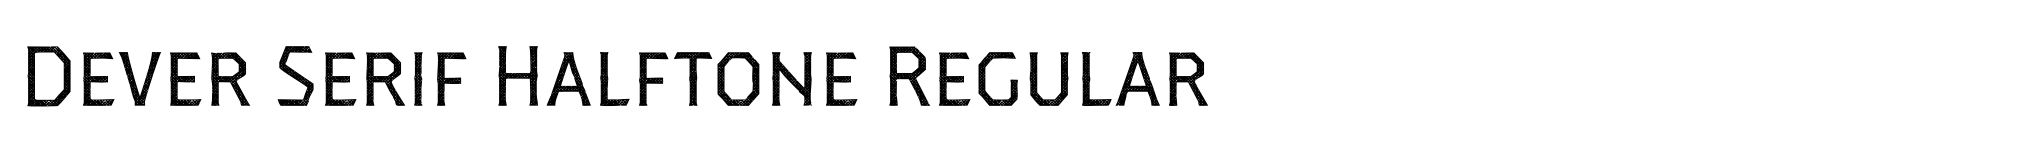 Dever Serif Halftone Regular image